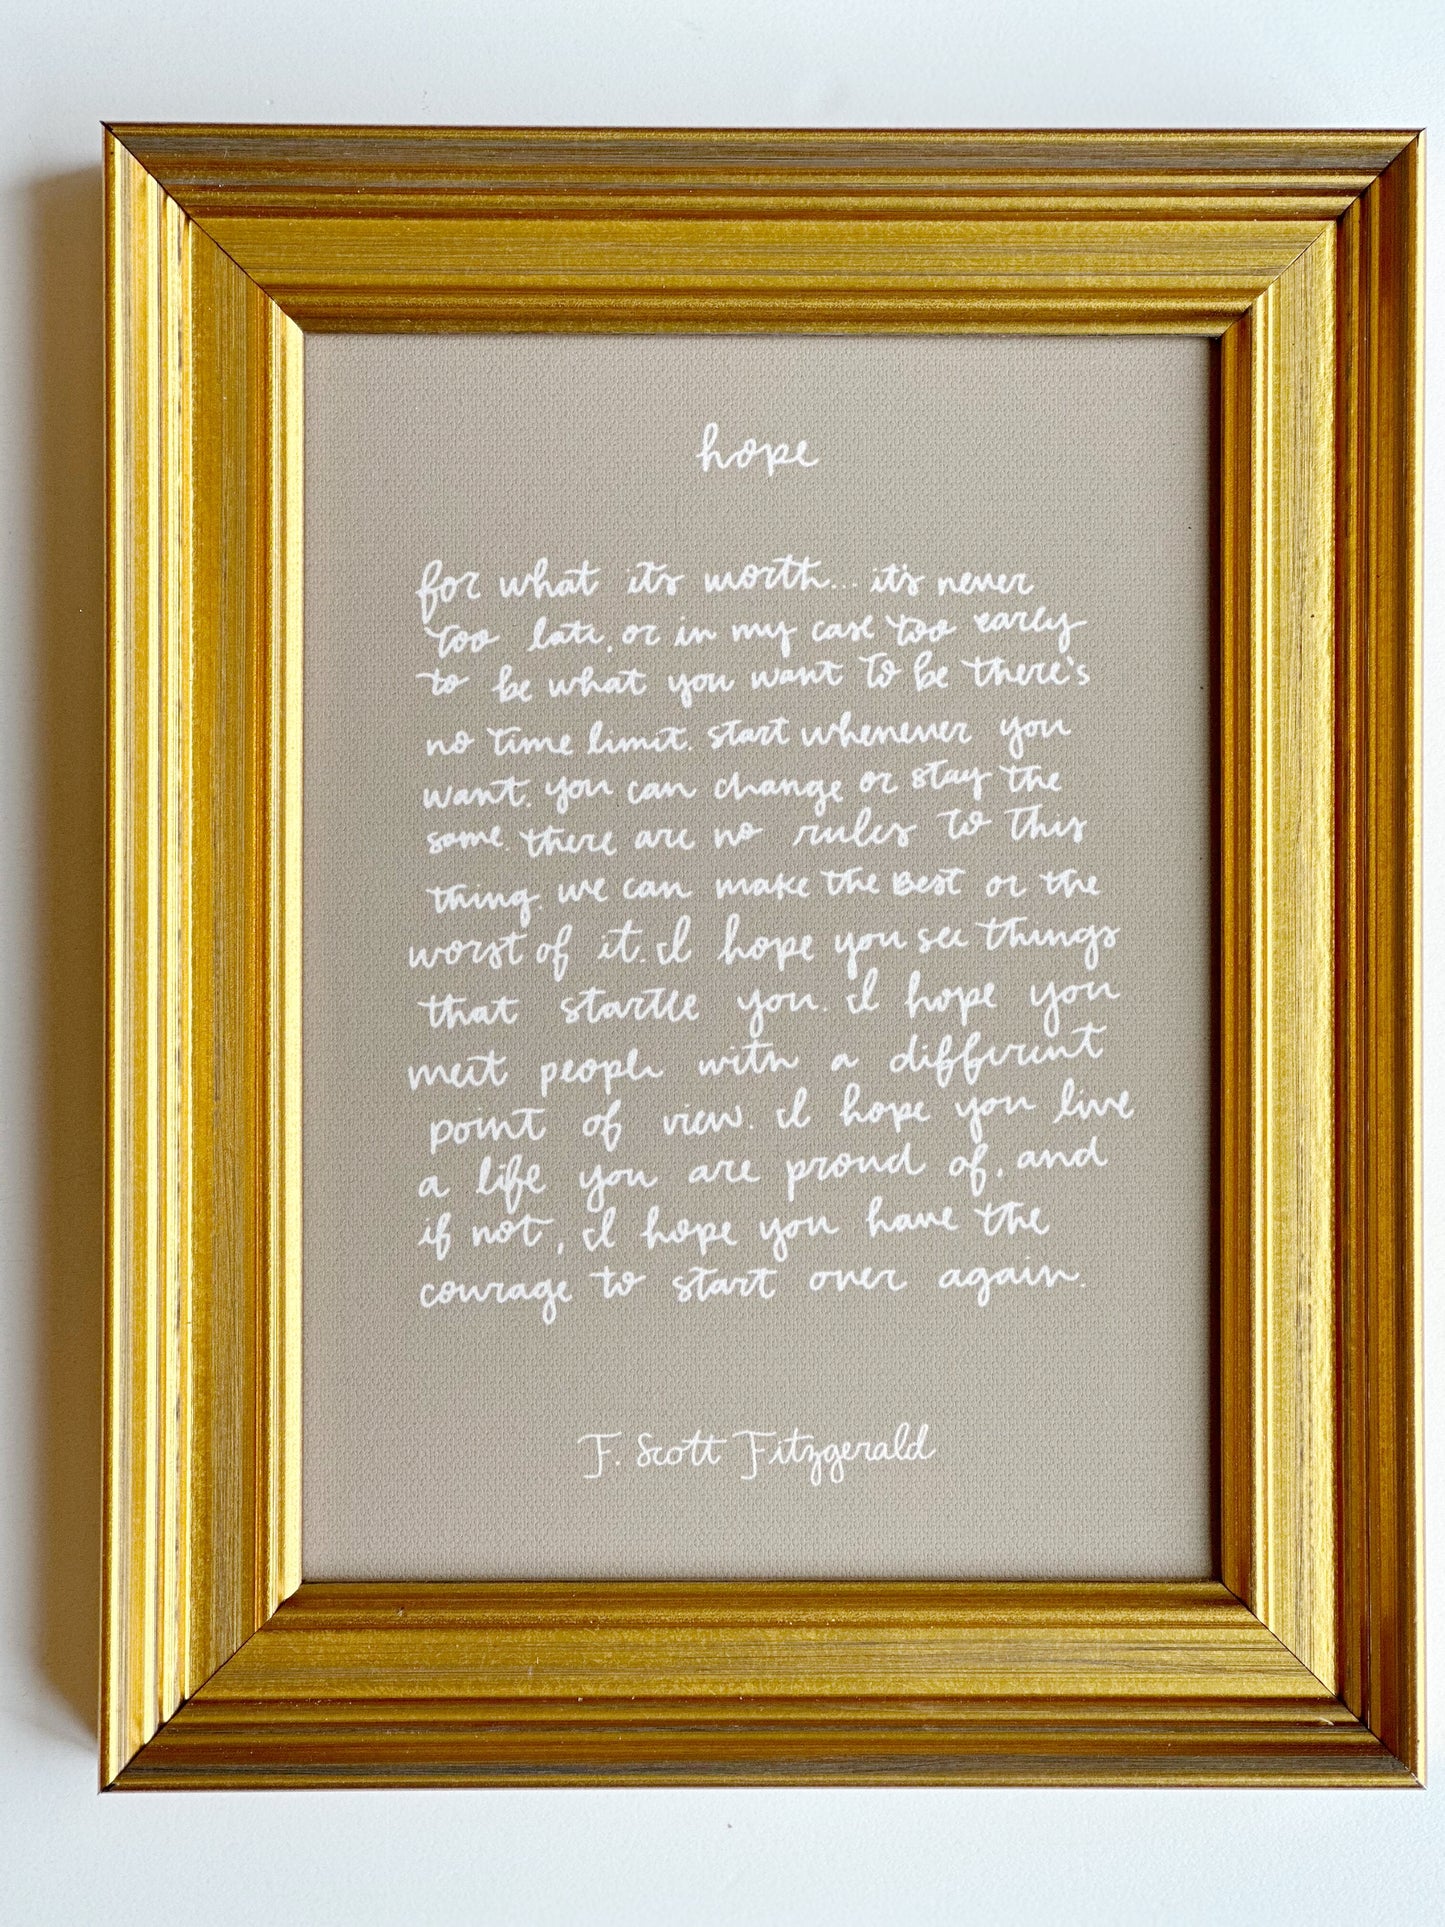 Hope by F. Scott Fitzgerald 6x8 Framed Print